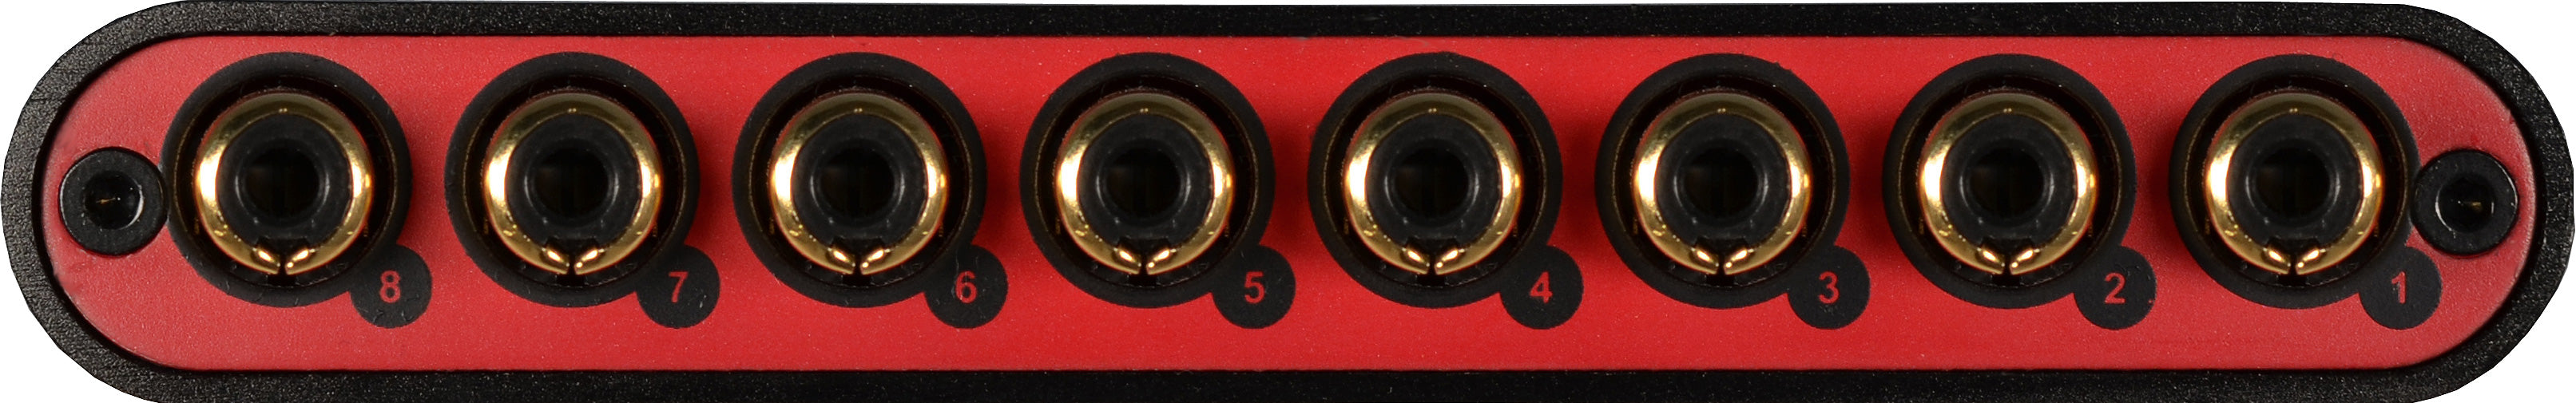 ESI Audio GIGAPORT eX - Professional 24-bit / 192 kHz 8 Output USB Audio Interface - Black/Red